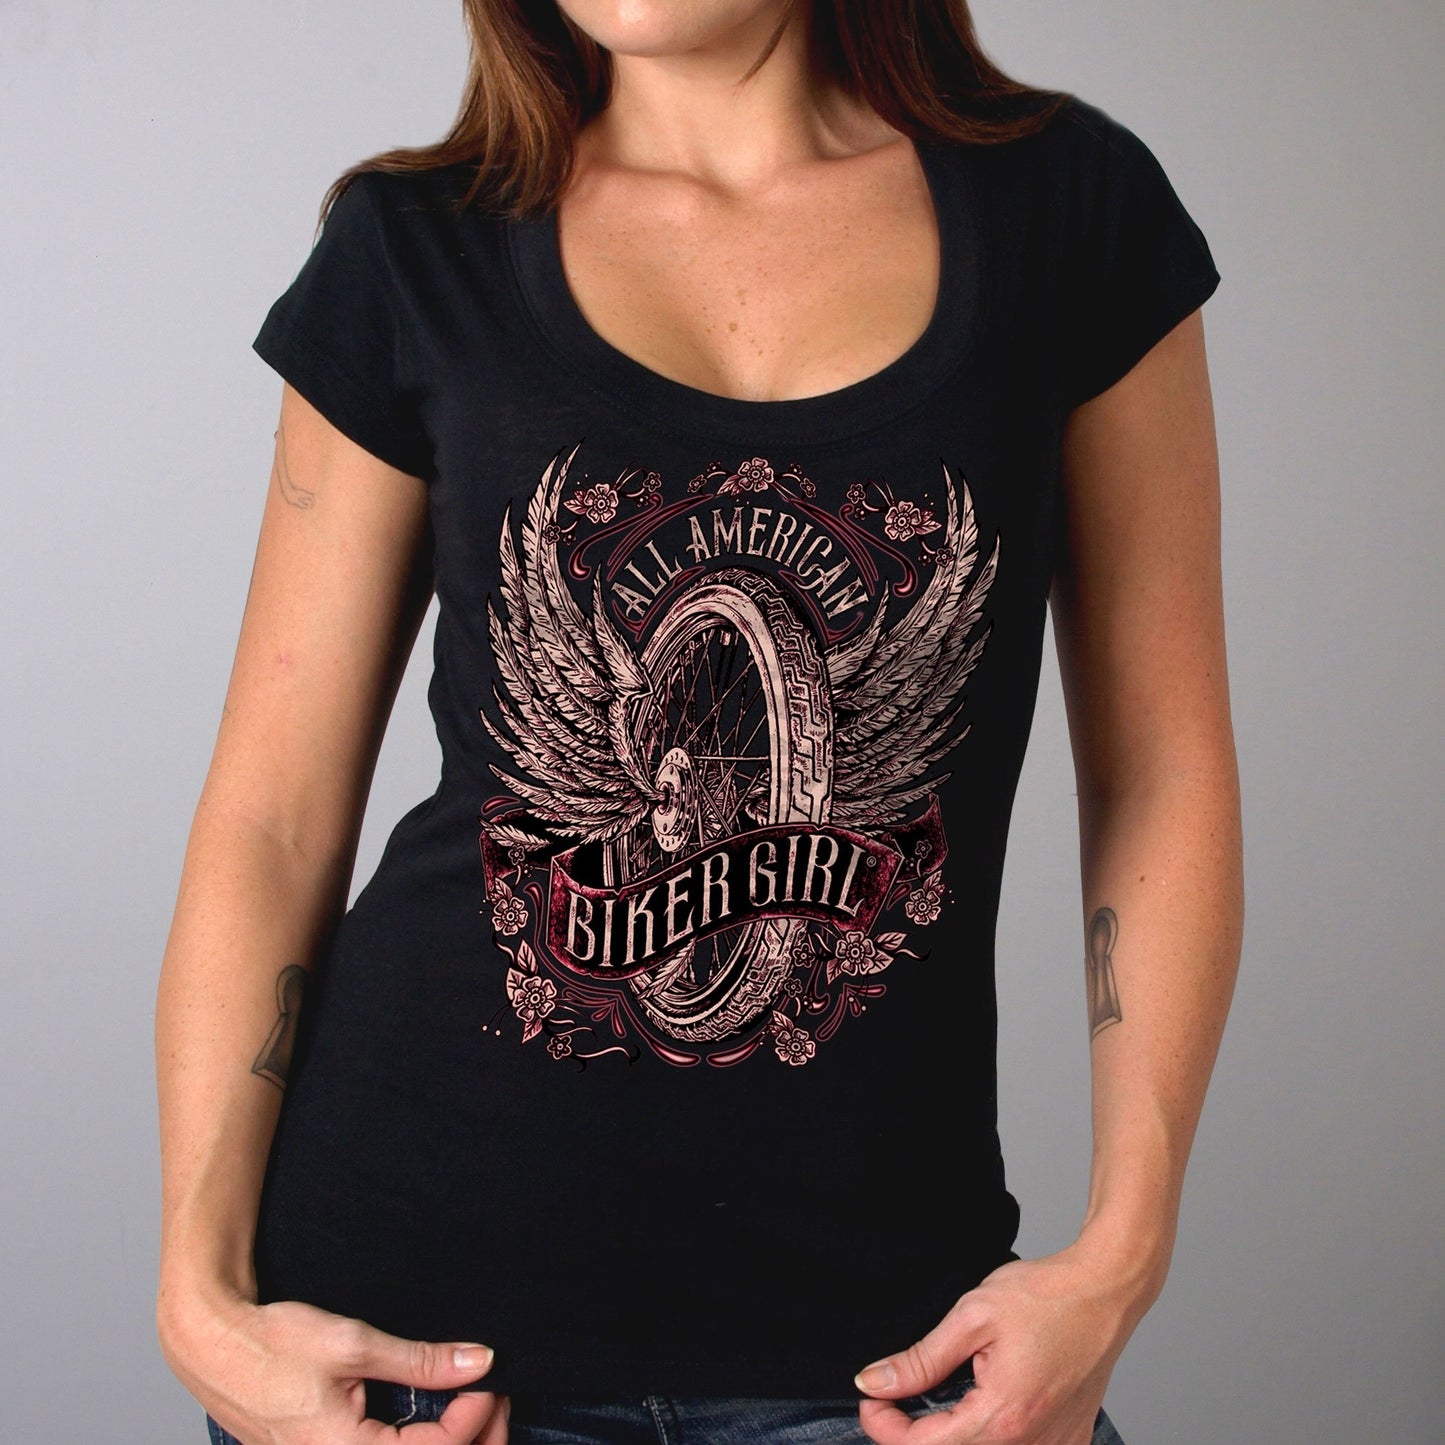 Hot Leathers GLC1518 Women's Black All American Biker Girl Scoop Neck Printed T-Shirt